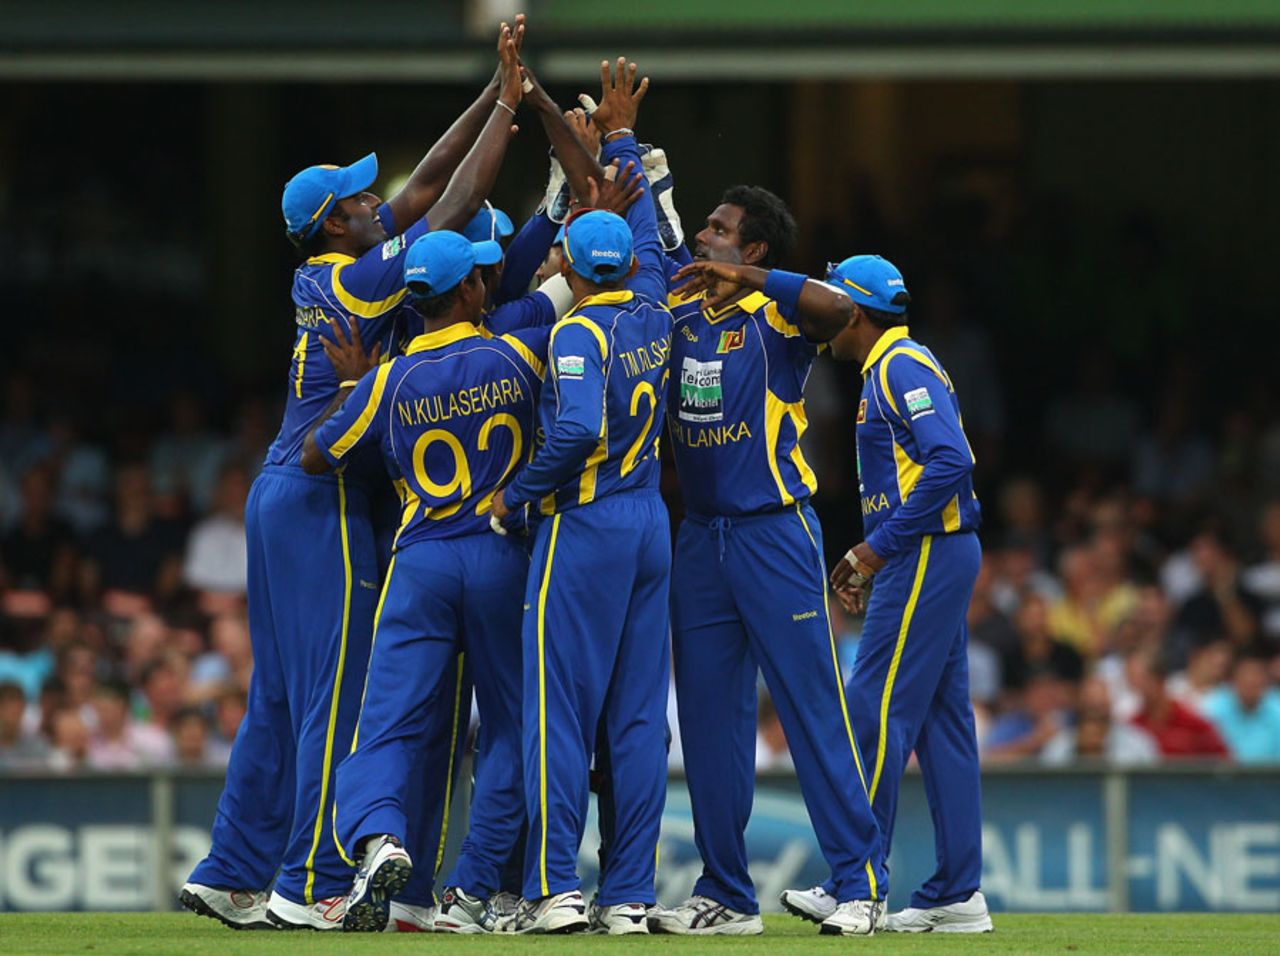 Sri Lanka nipped out six wickets before the rain came, Australia v Sri Lanka, CB Series, Sydney, February 17, 2012